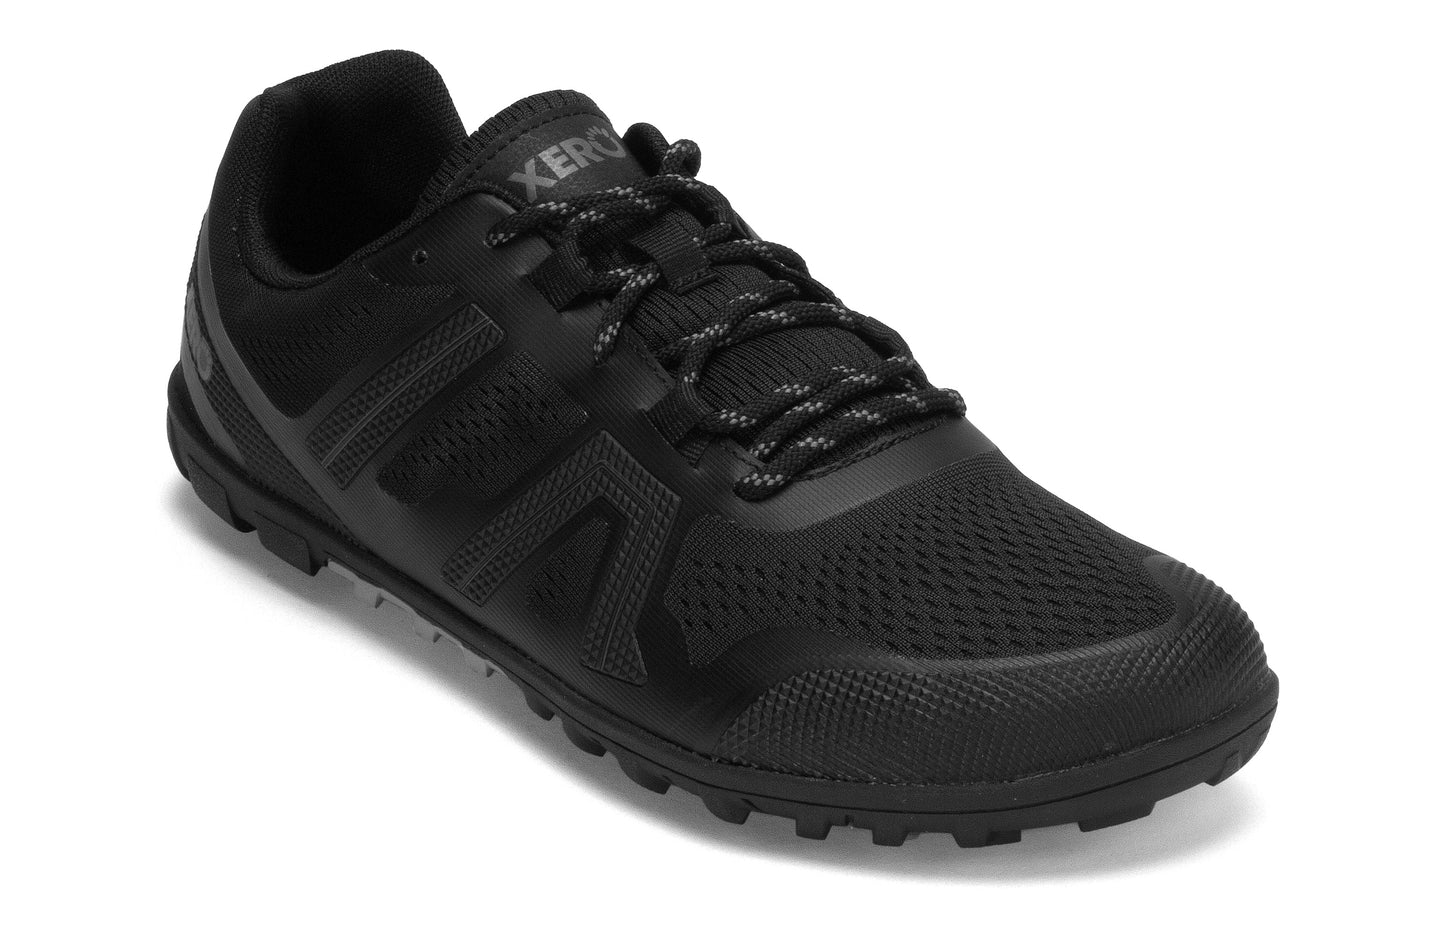 Xero Shoes Mesa Trail II Mens barfods vandresko til mænd i farven black, vinklet